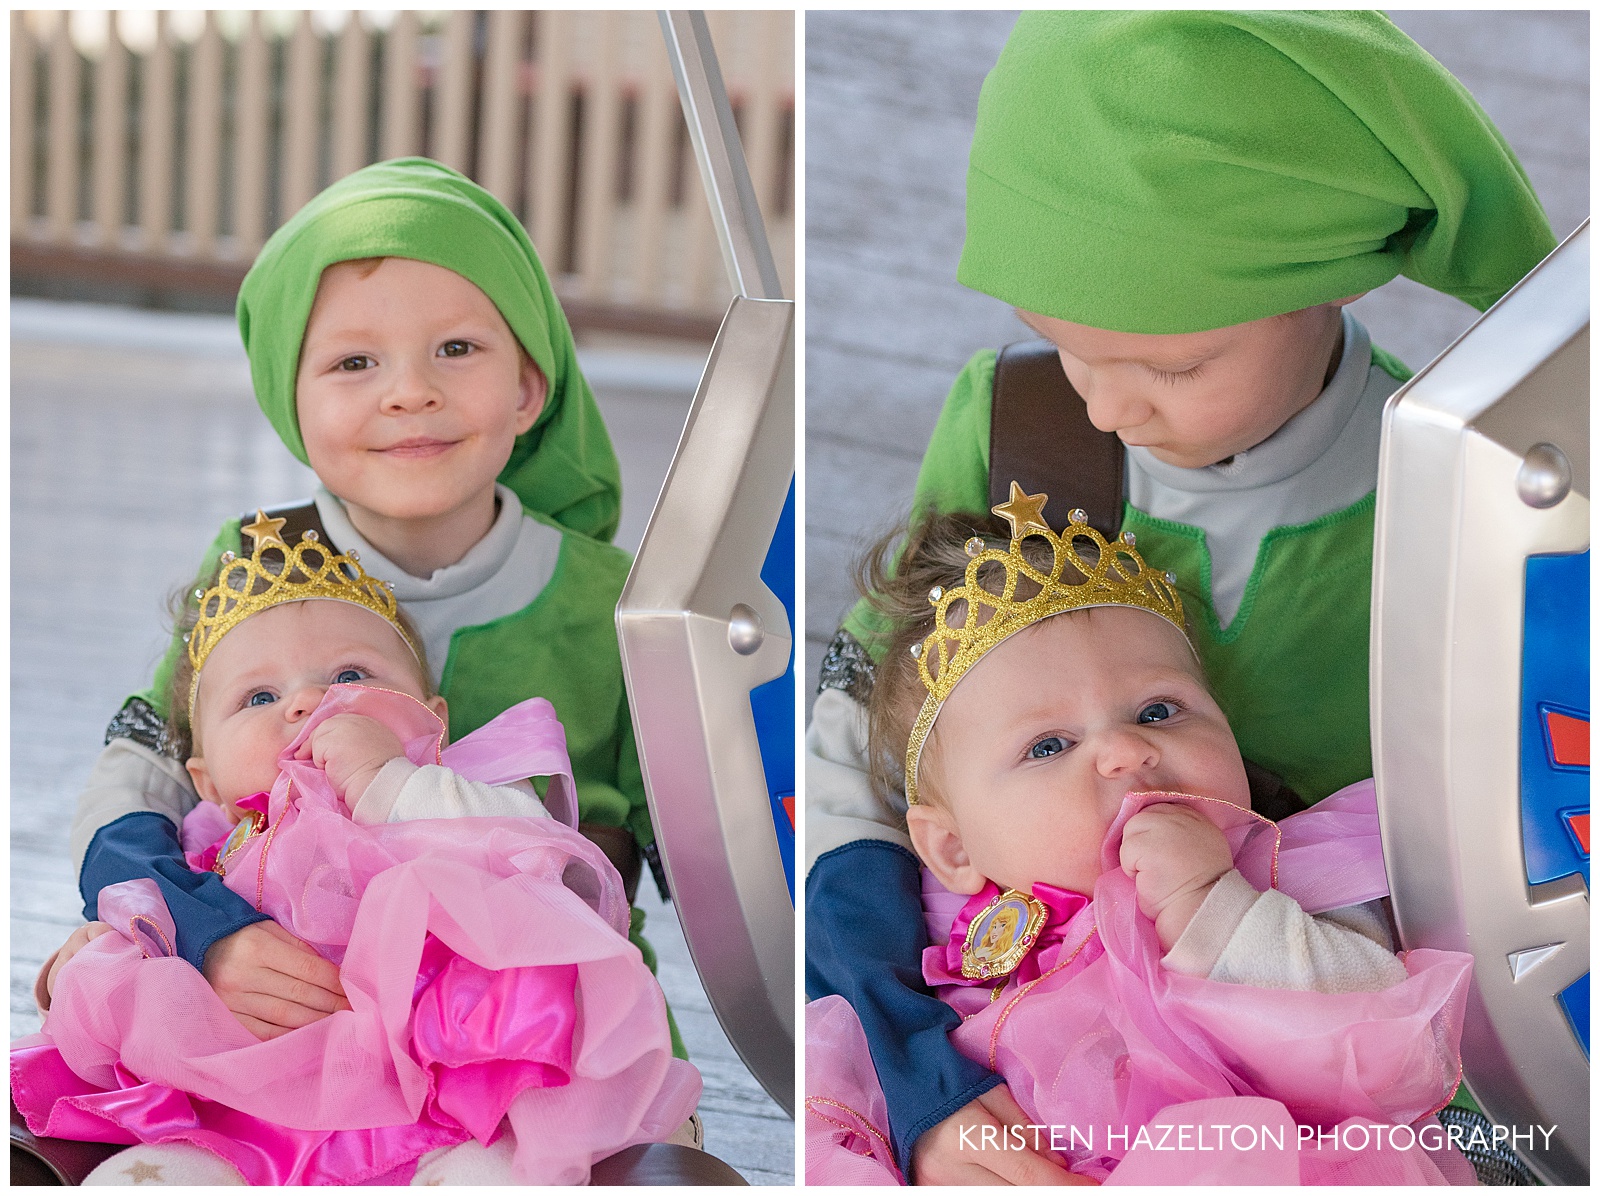 Kids dressed up as Link and Princess Zelda